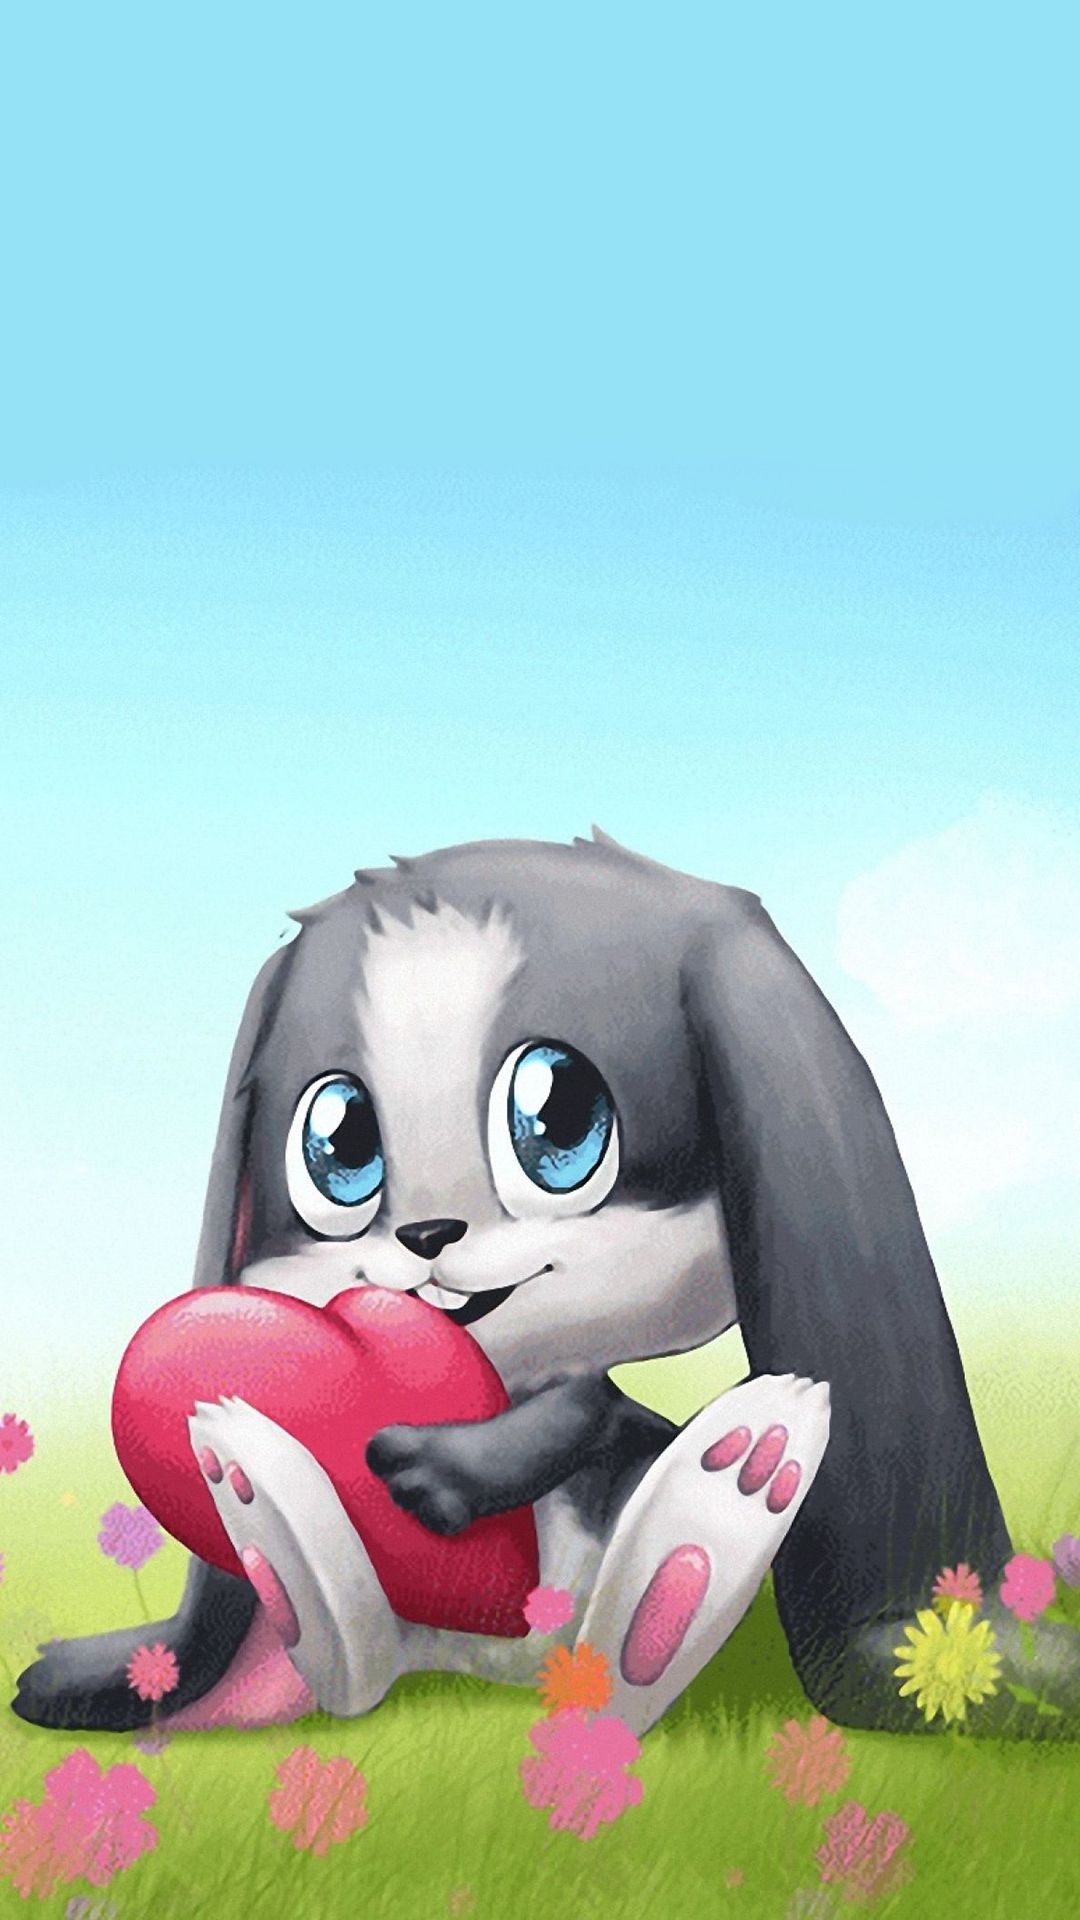 Kawaii Bunny iPhone Wallpapers - Wallpaper Cave